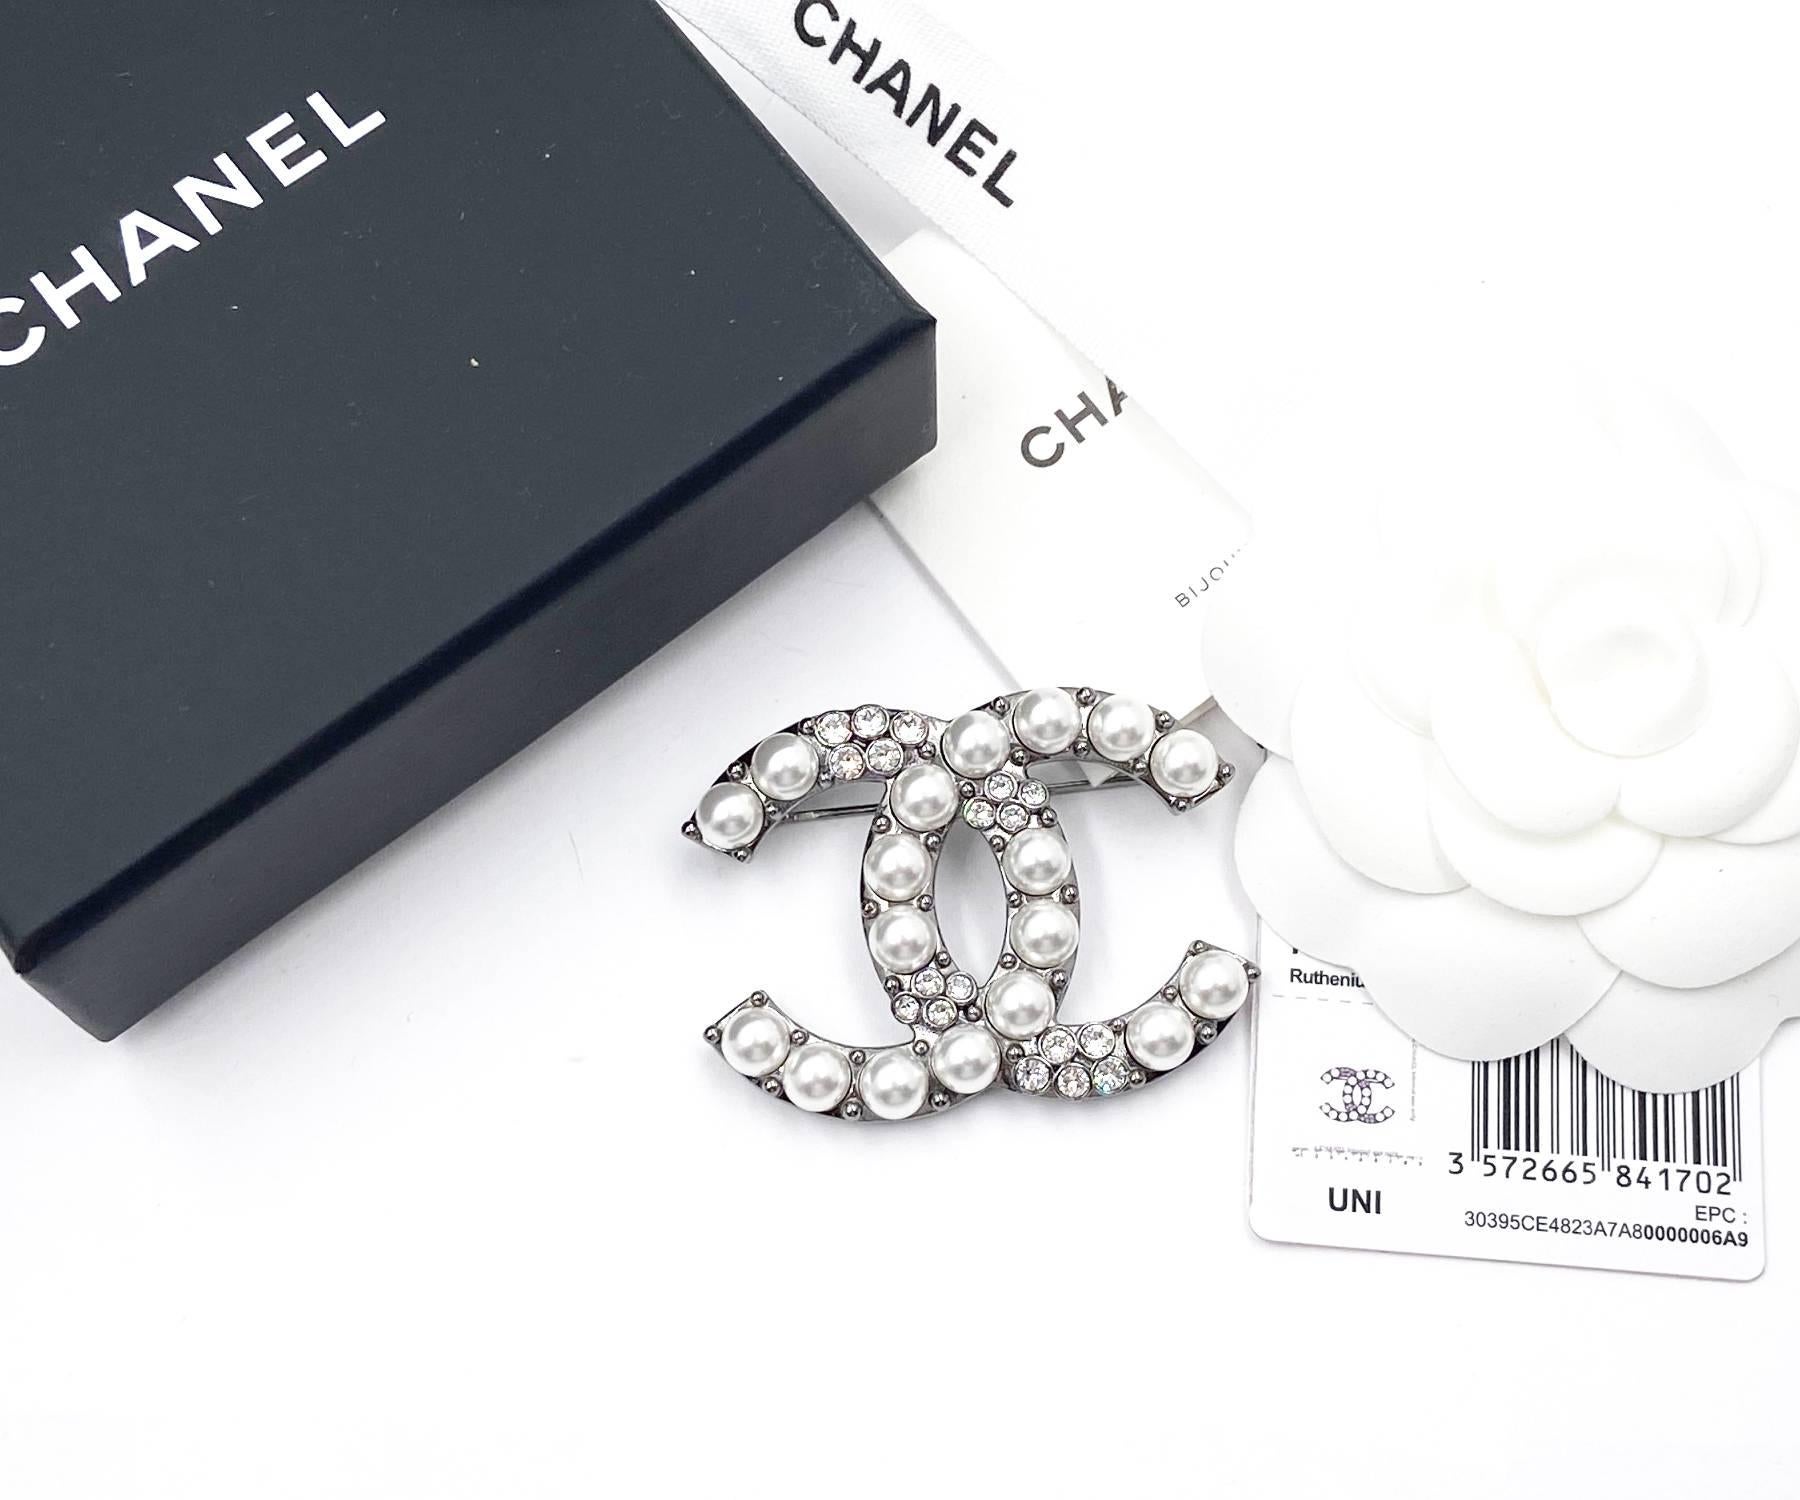 Artisan Chanel Brand New Gunmetal CC Crystal Pearl Brooch